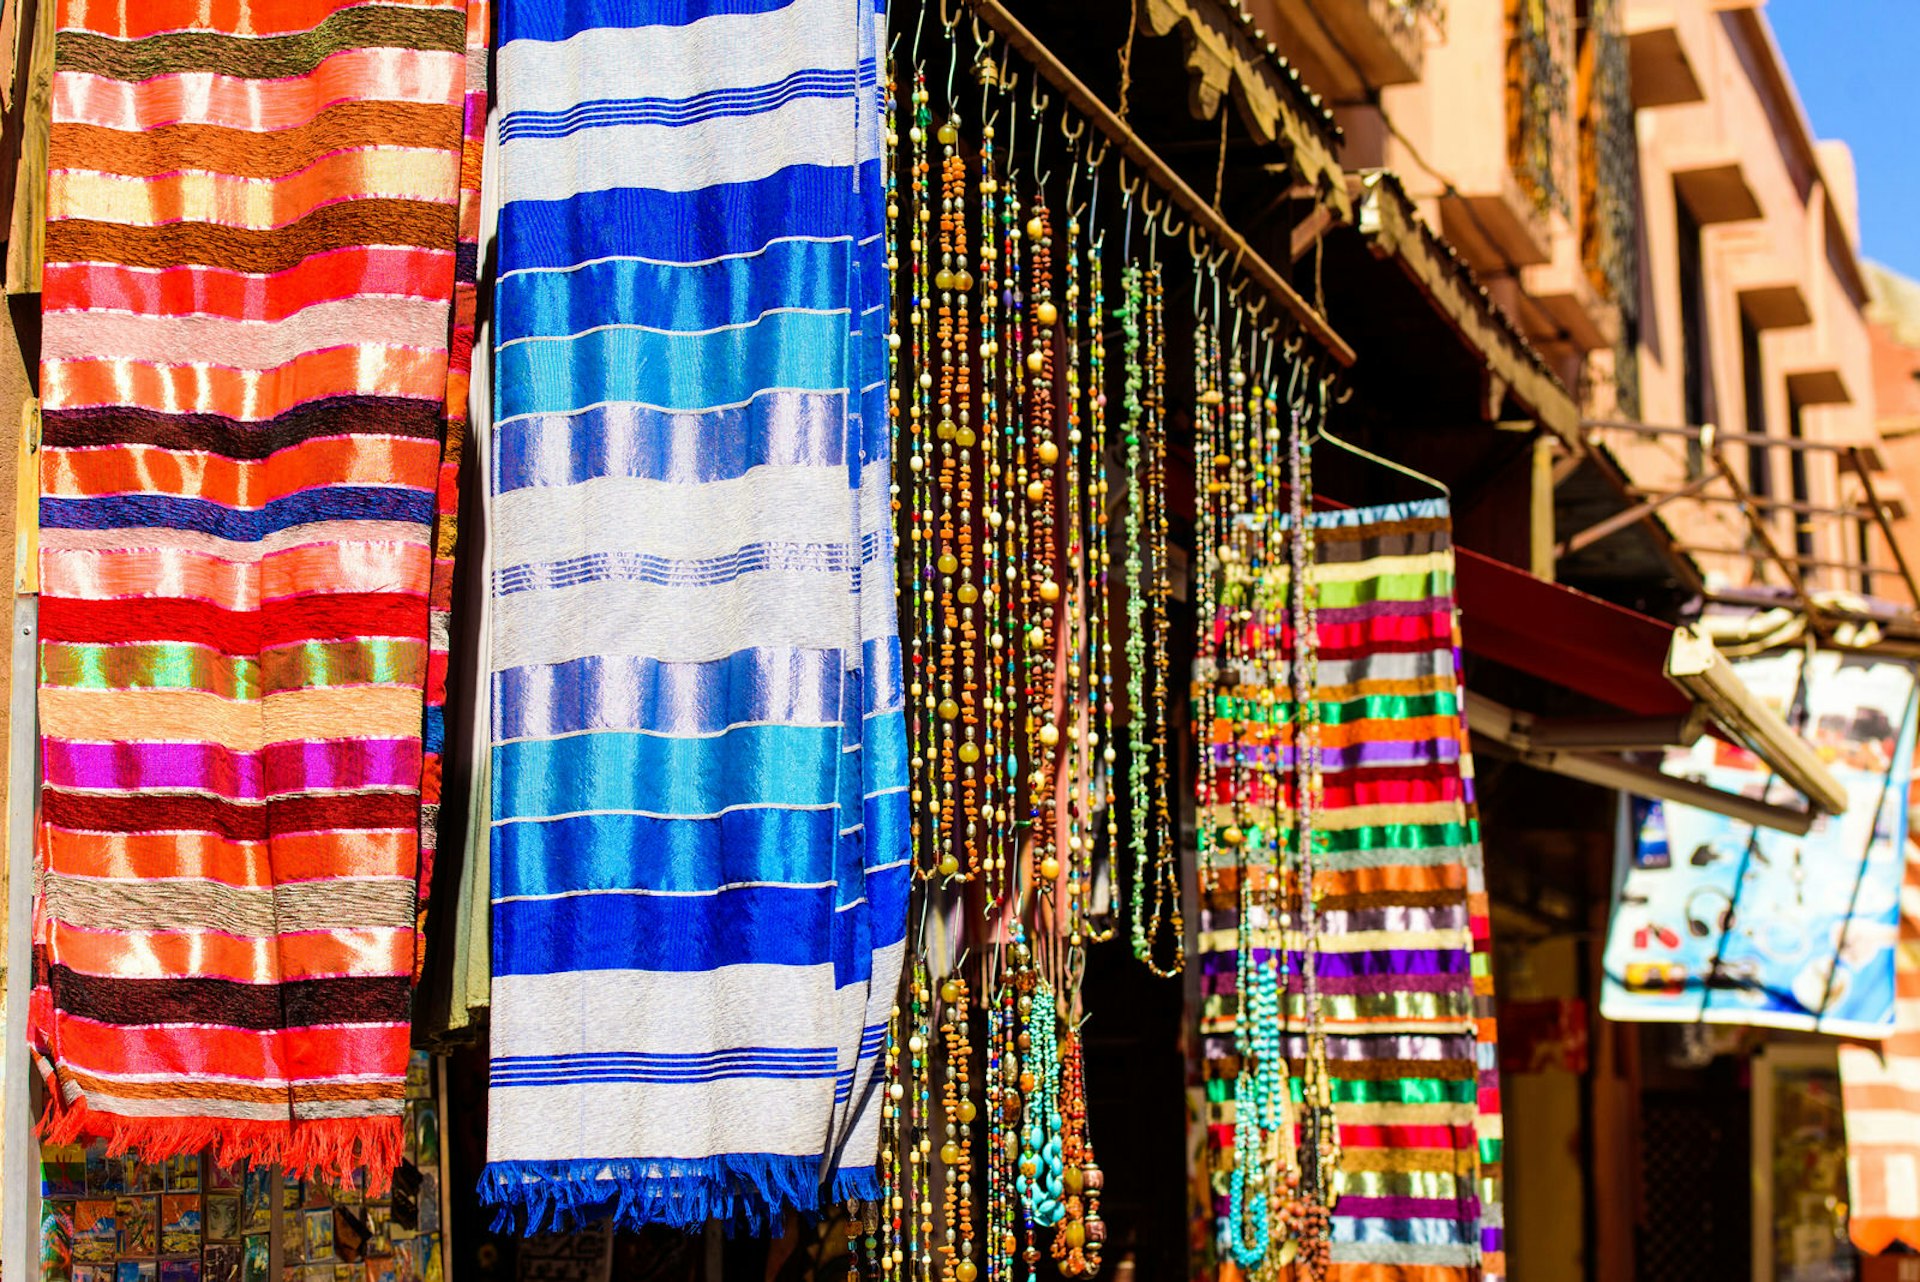 Pashminas for sale in a Dubai market. Image by Panuvat Ueachananon / Shutterstock